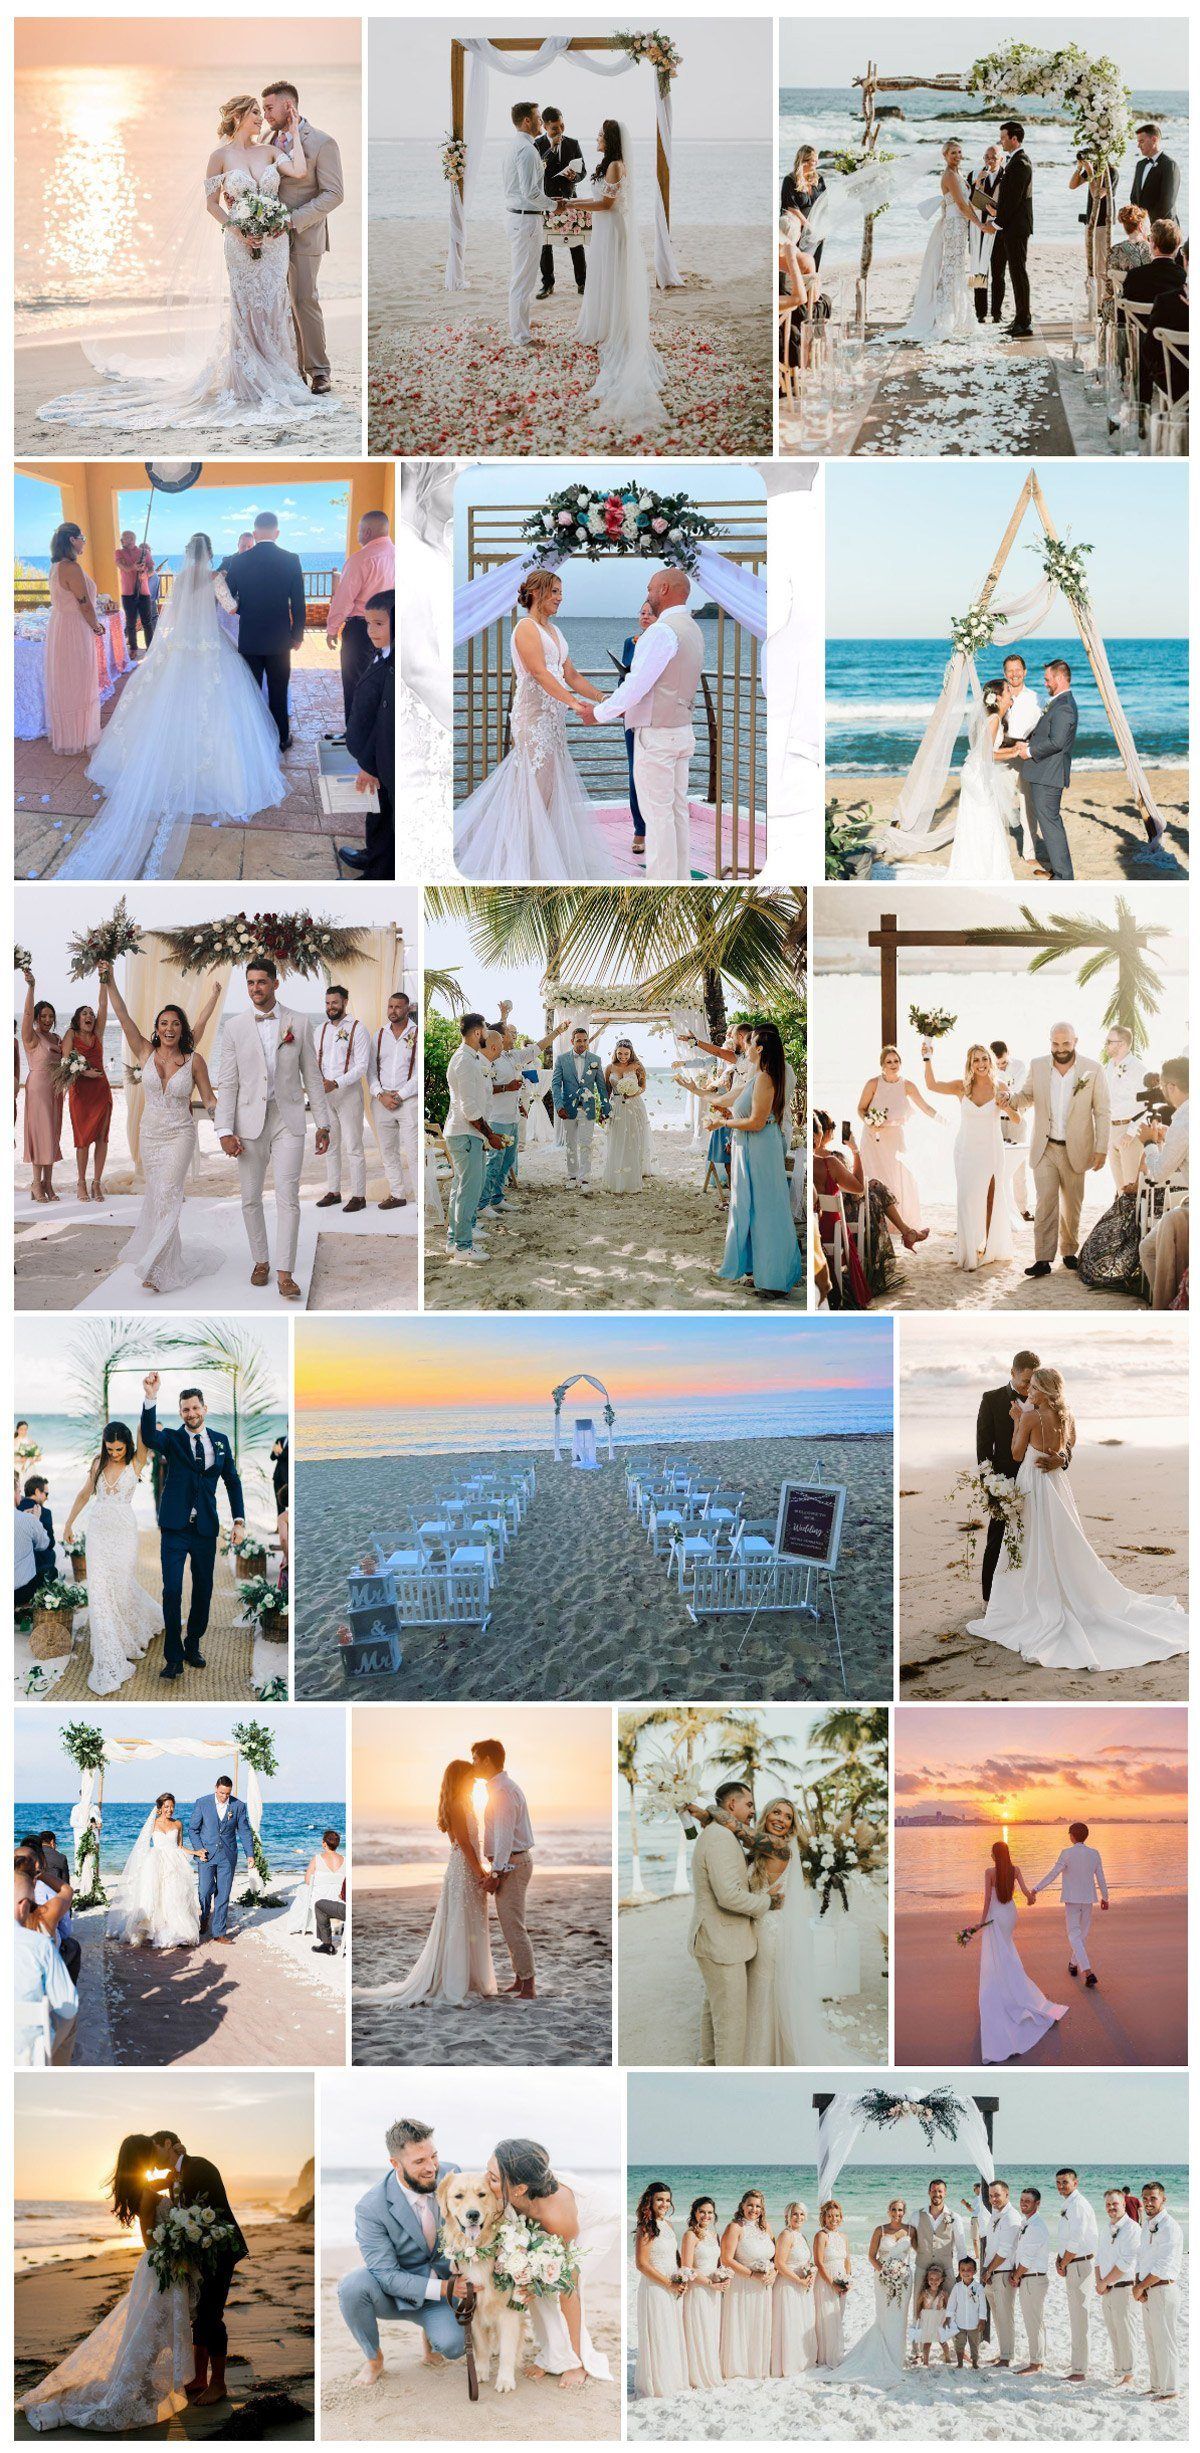 Weedings: Get married on a Puerto Rico beach